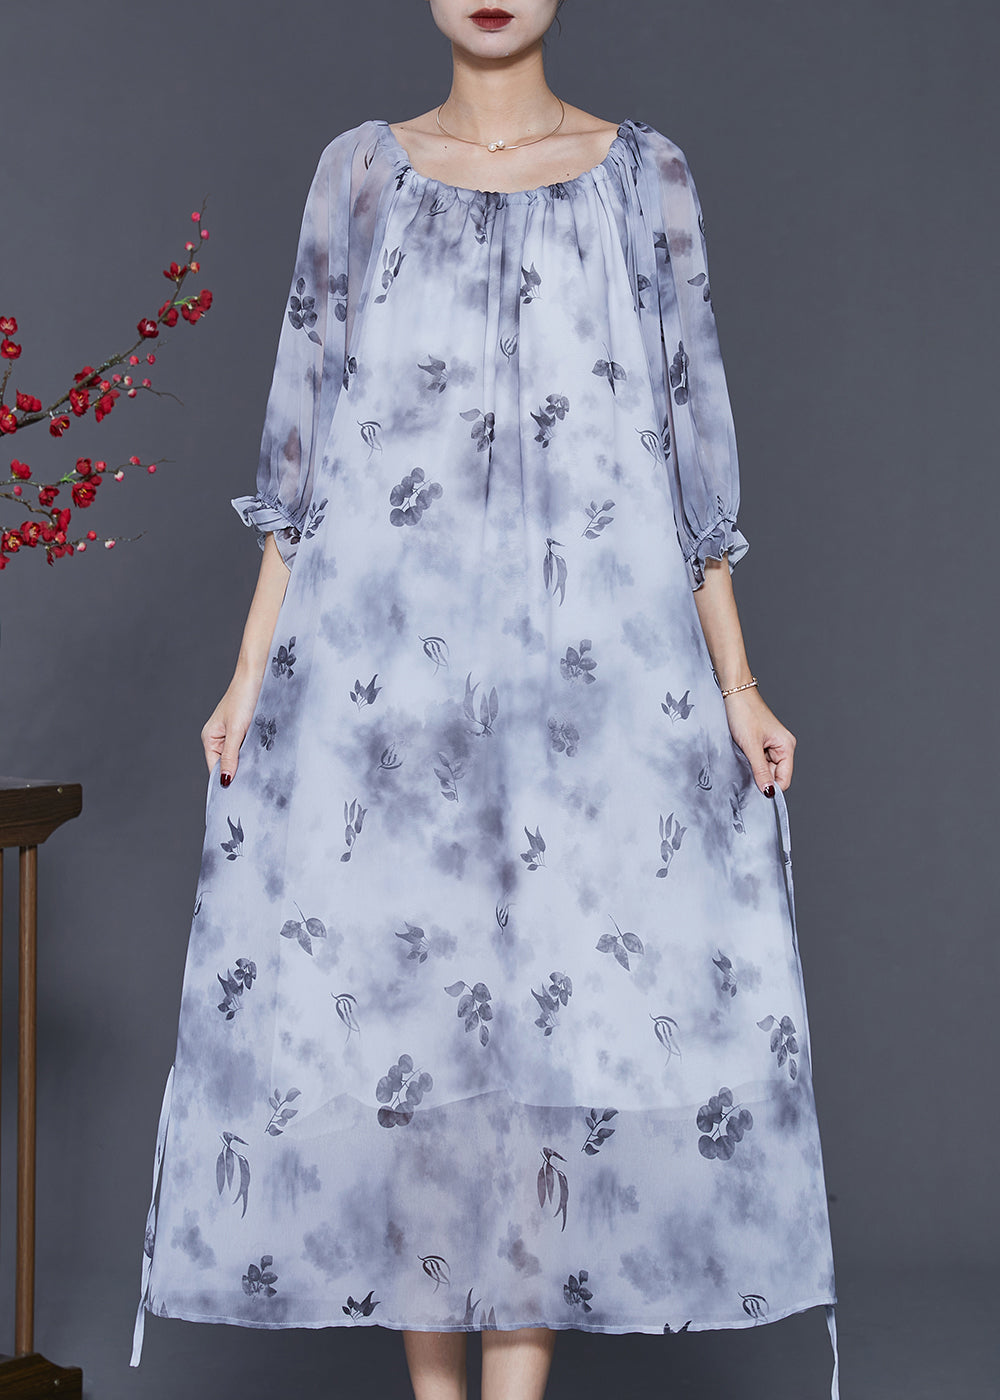 Women Grey Print Tie Dye Chiffon Long Dress Half Sleeve